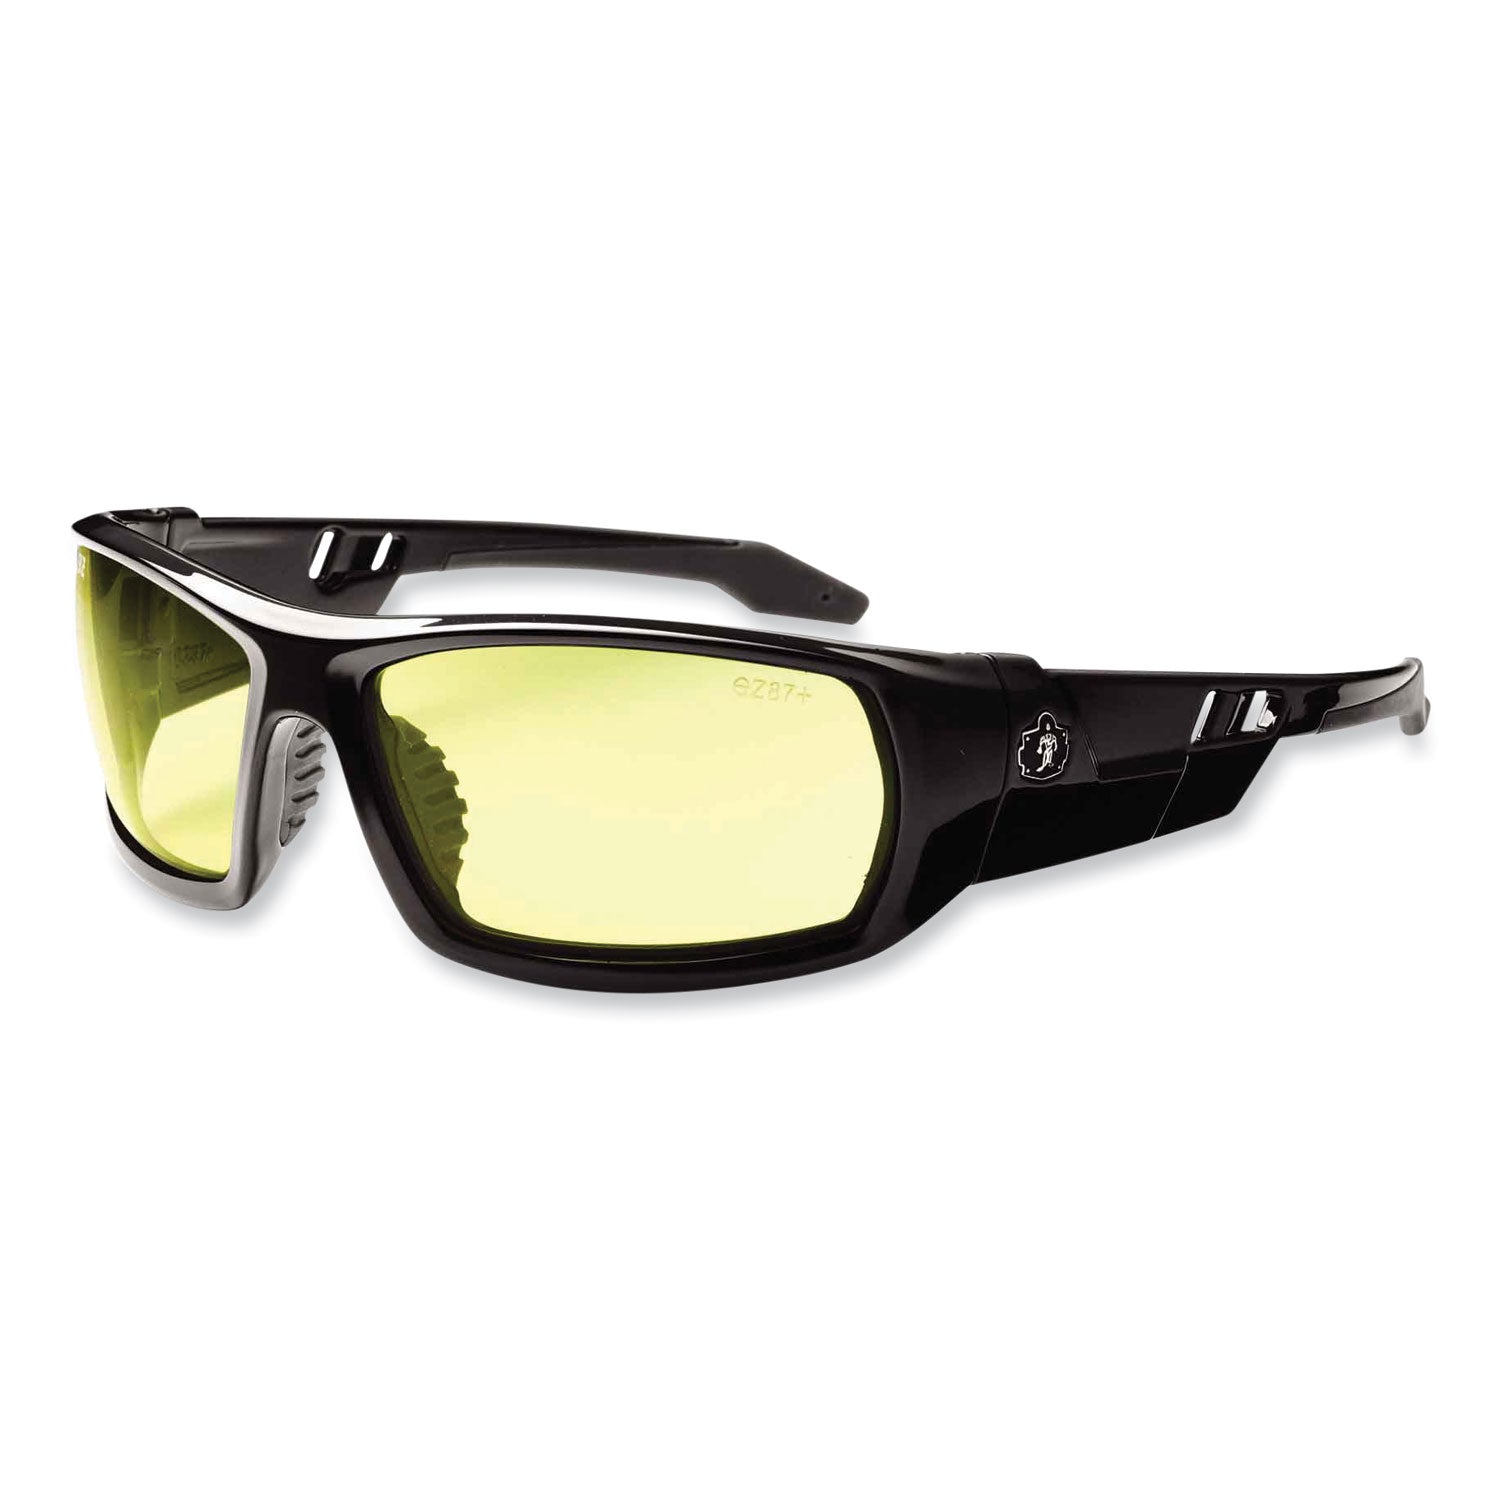 skullerz-odin-safety-glasses-black-nylon-impact-frame-yellow-polycarbonate-lens-ships-in-1-3-business-days_ego50050 - 1